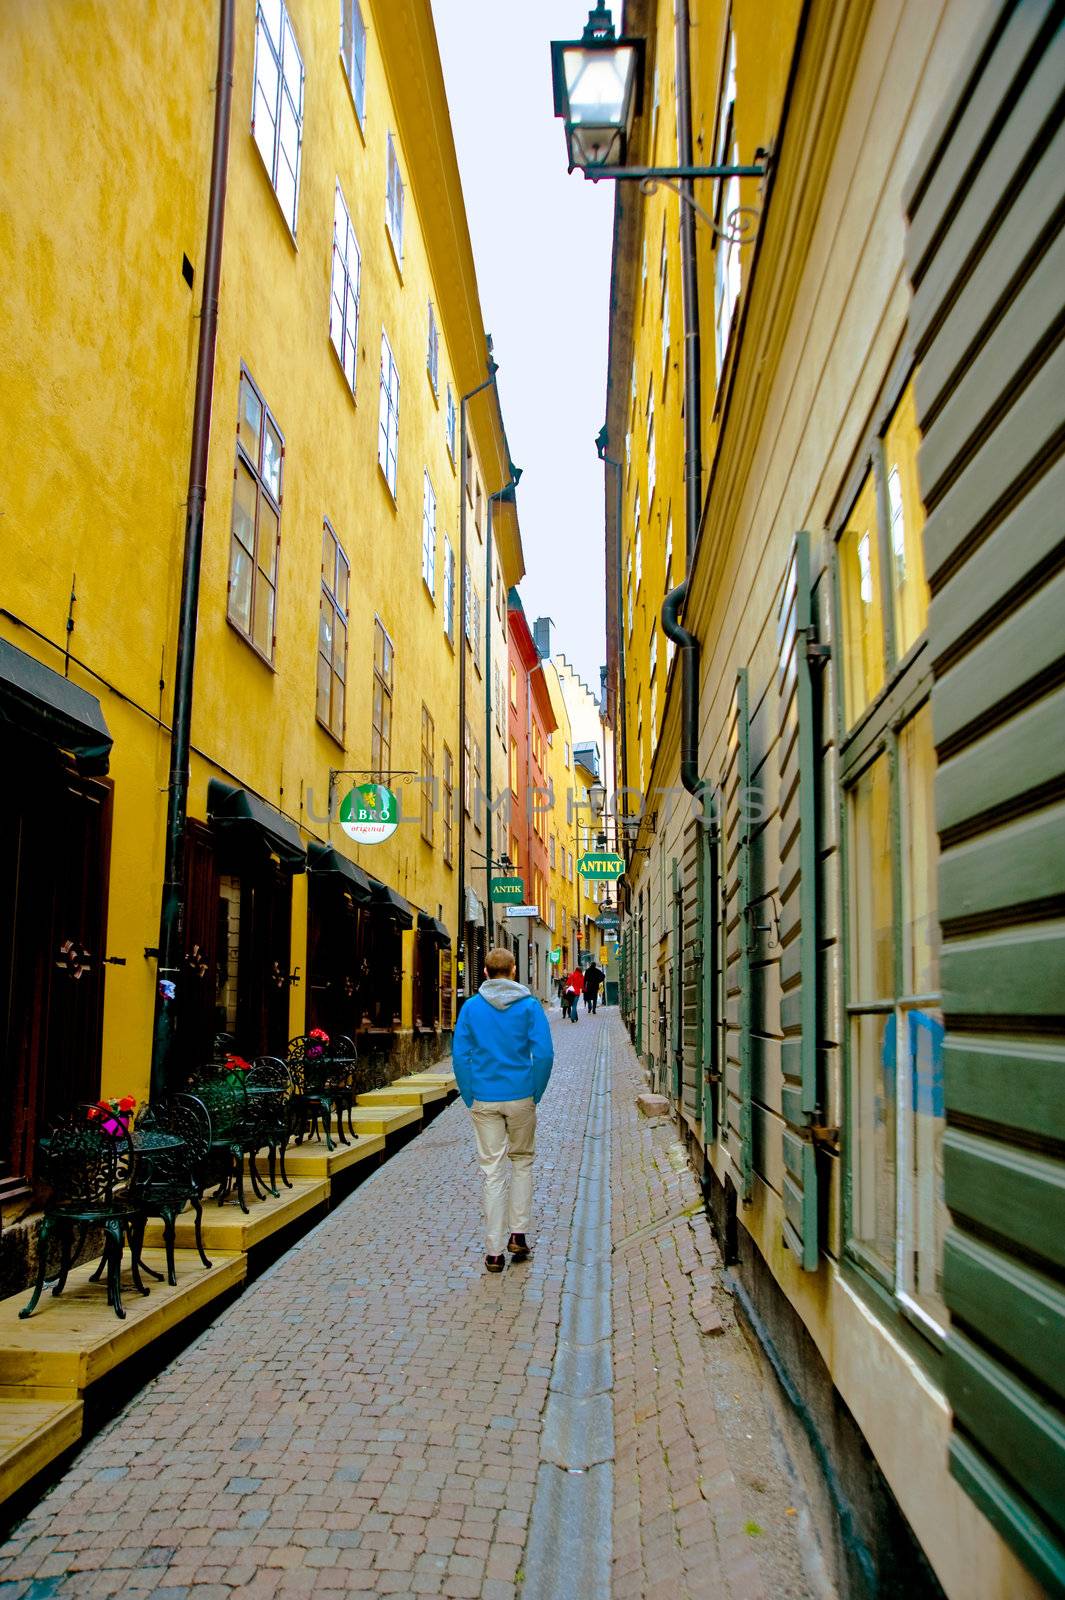 An alley in Gamla Stan, Stockholm Sweden
